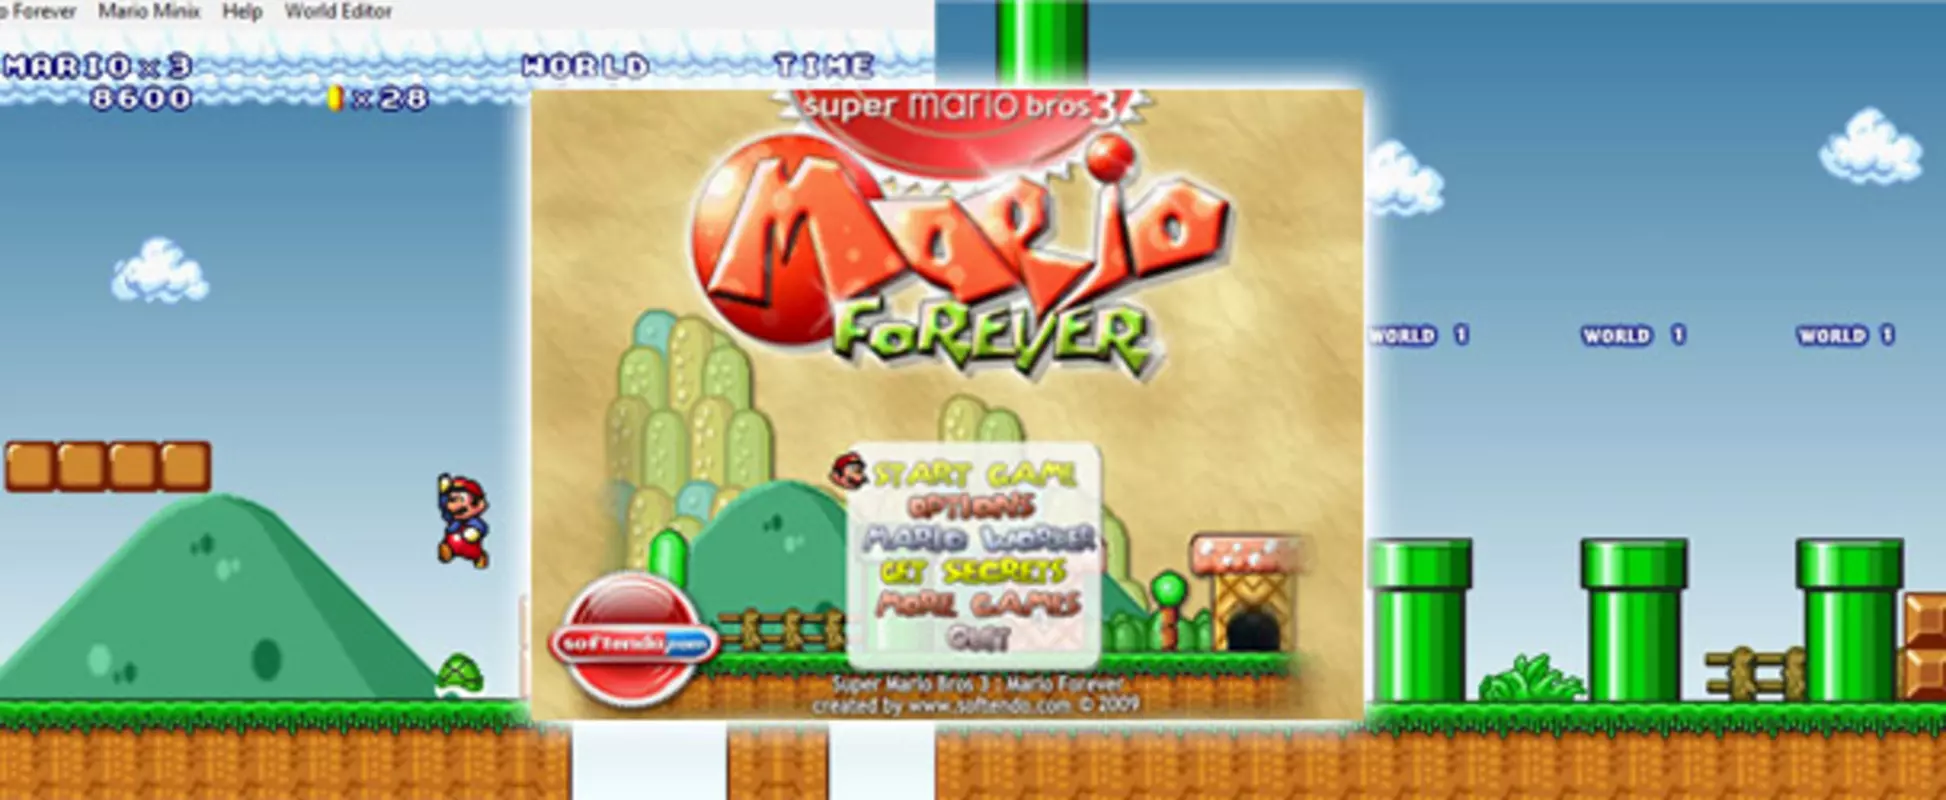 Super Mario 3: Mario Forever - Free Download